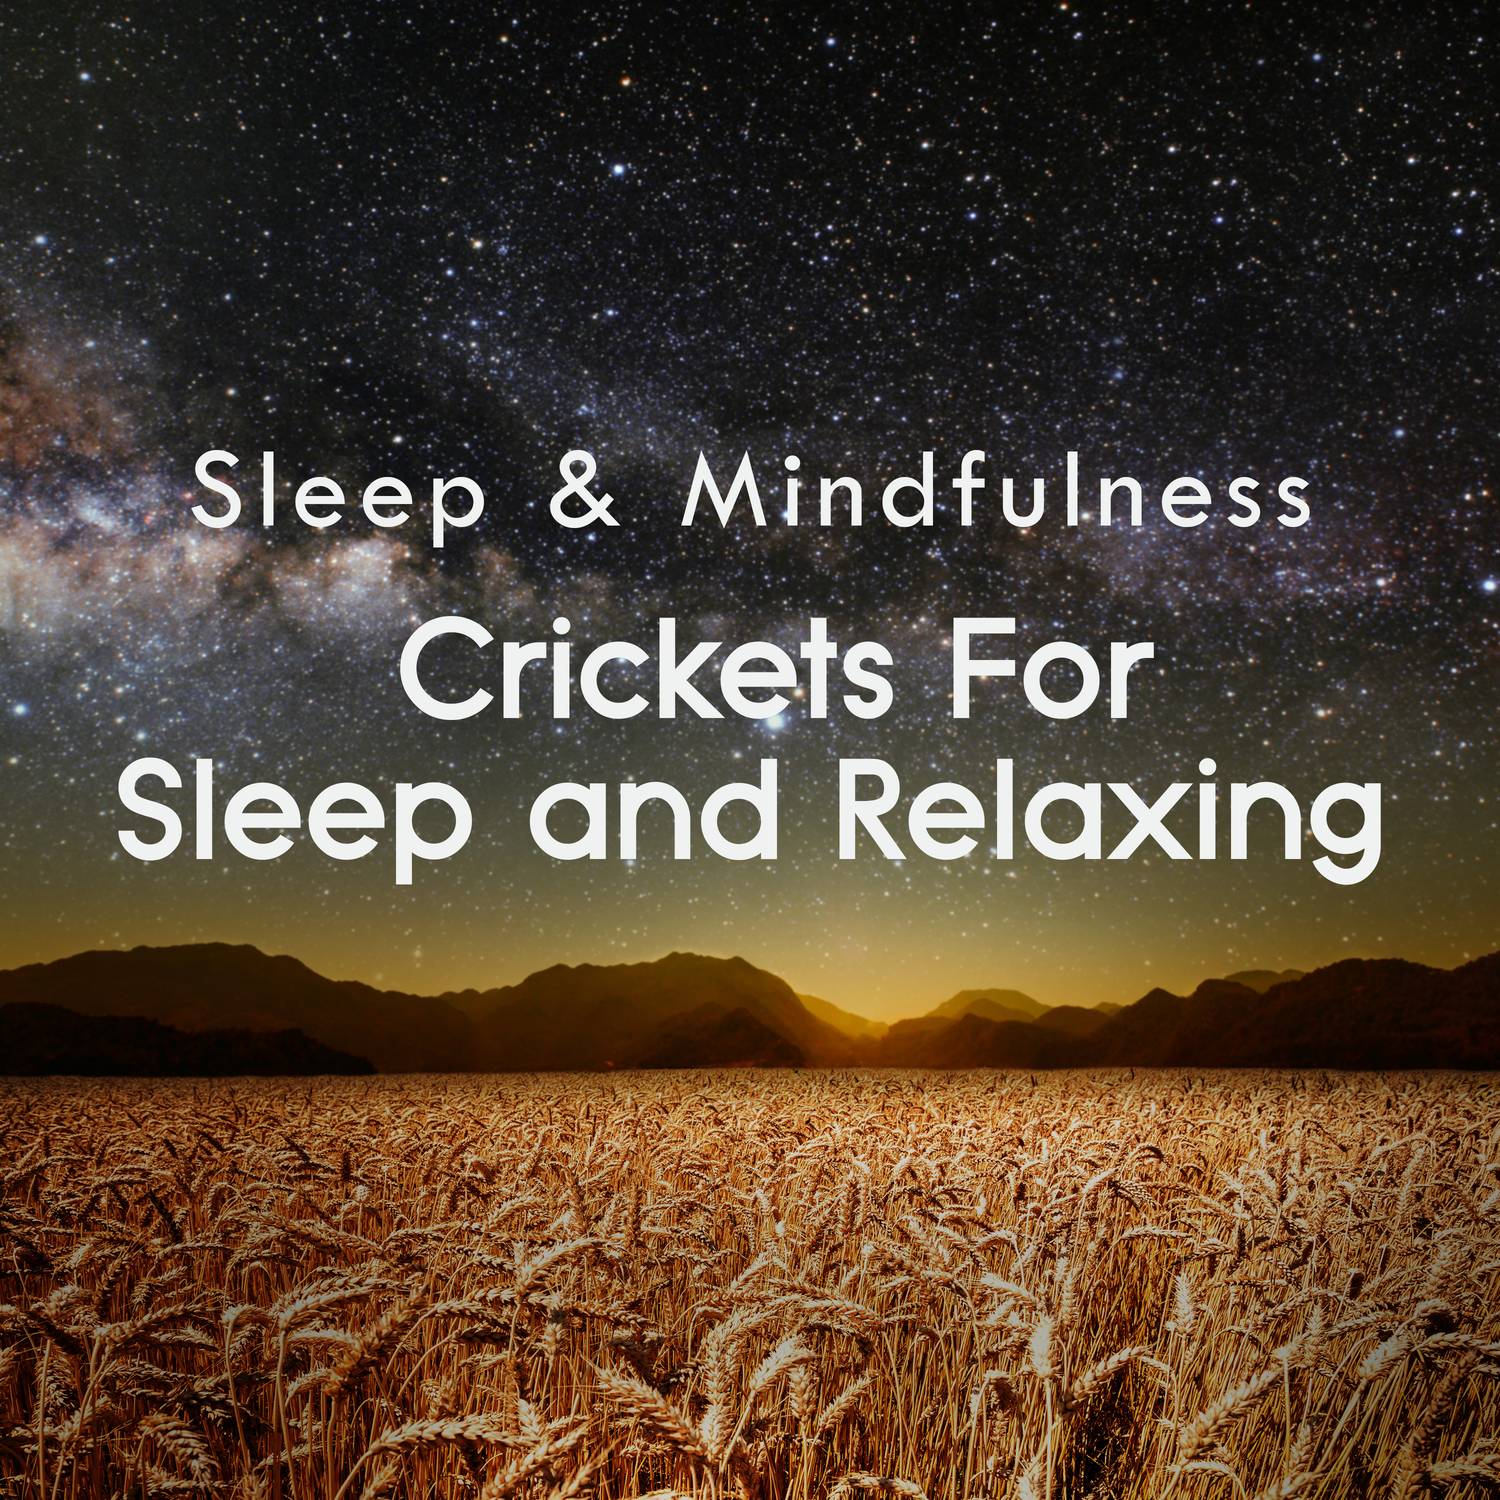 Crickets for Sleep and Relaxing (Sleep & Mindfulness)